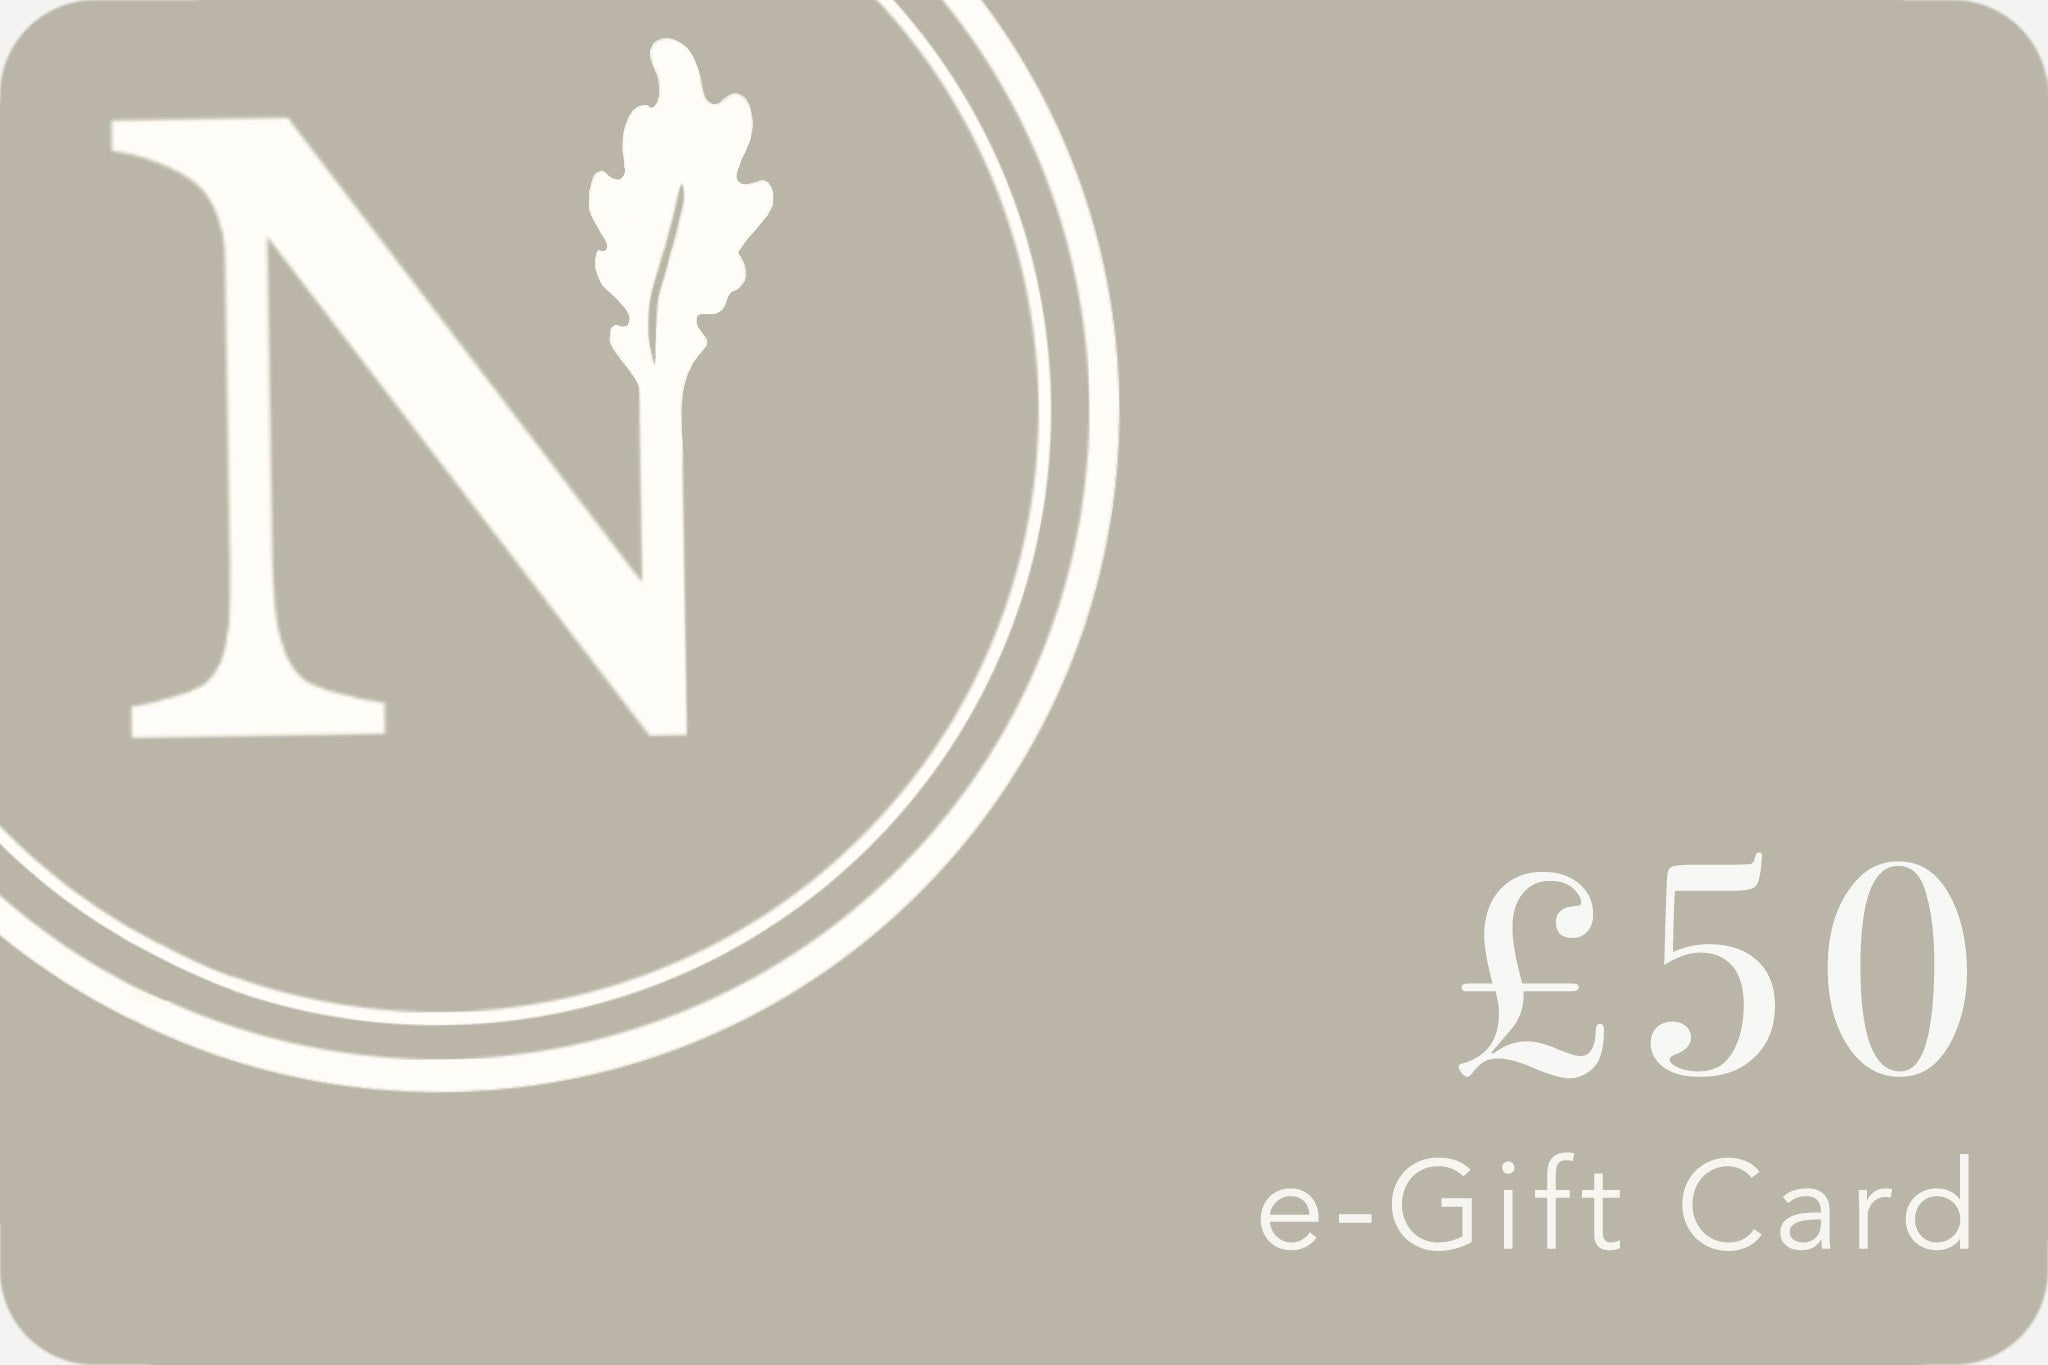 Nestie gift card £50